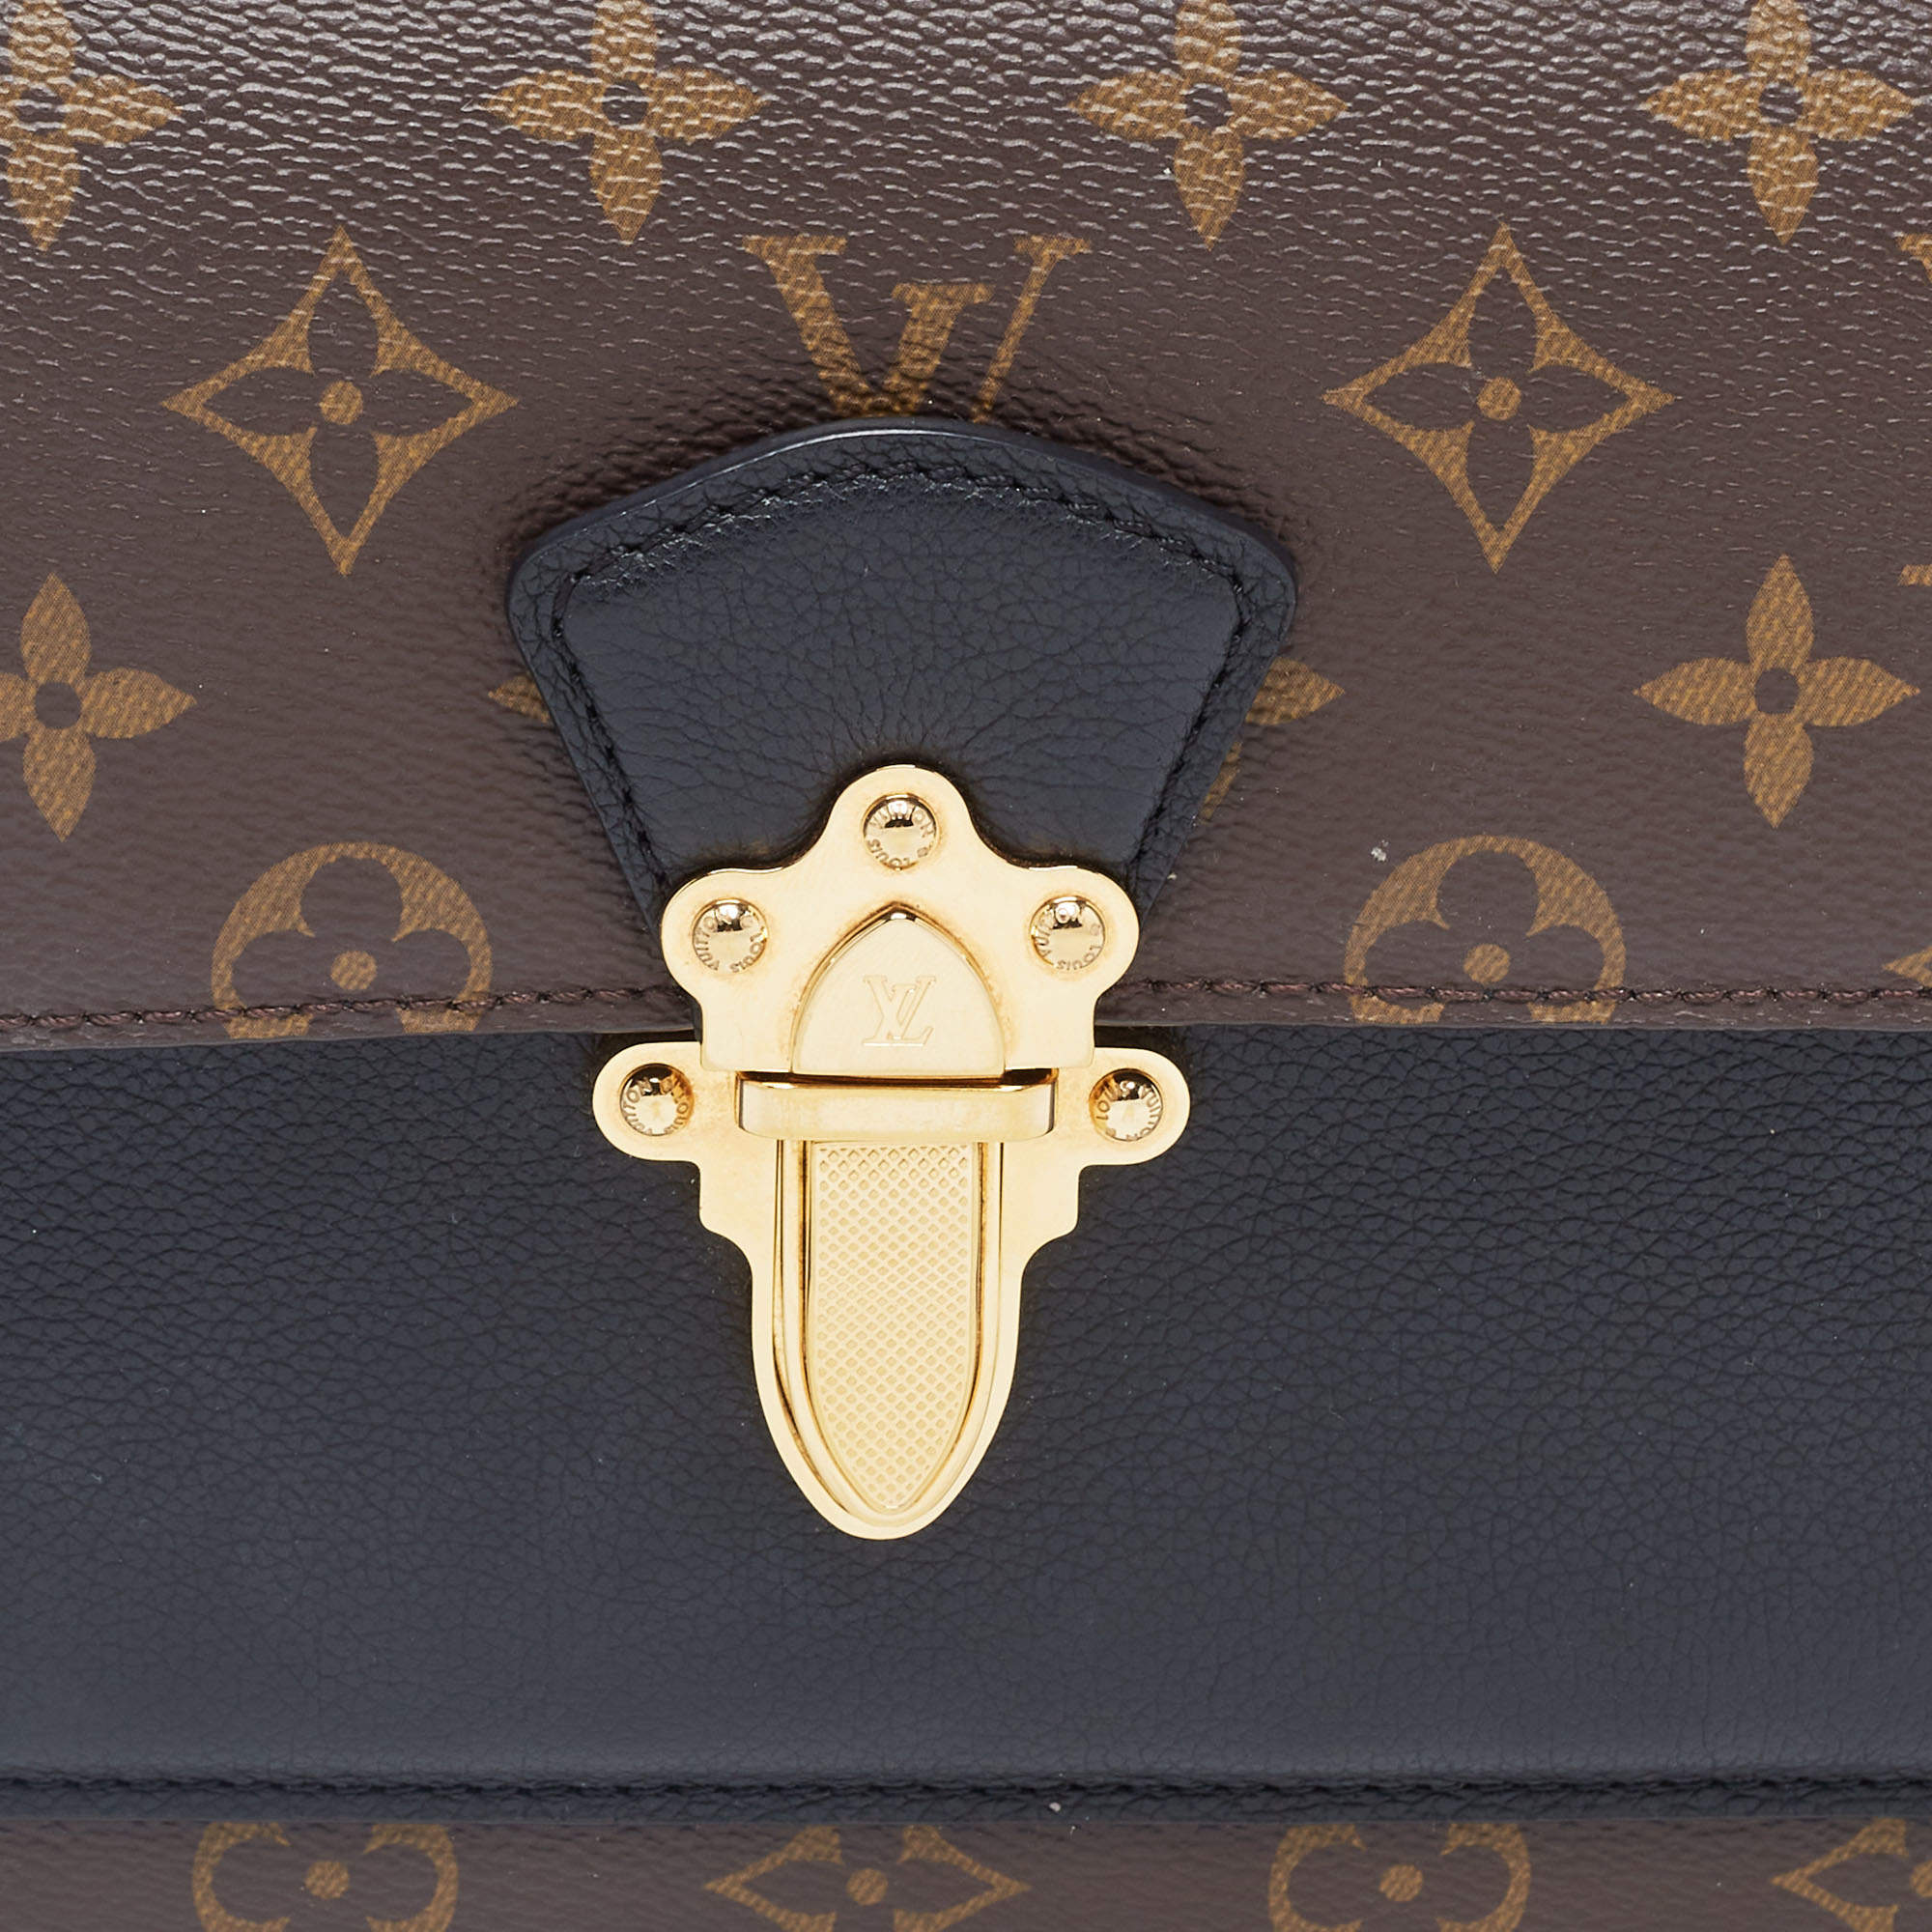 Victoire cloth handbag Louis Vuitton Black in Cloth - 34864572